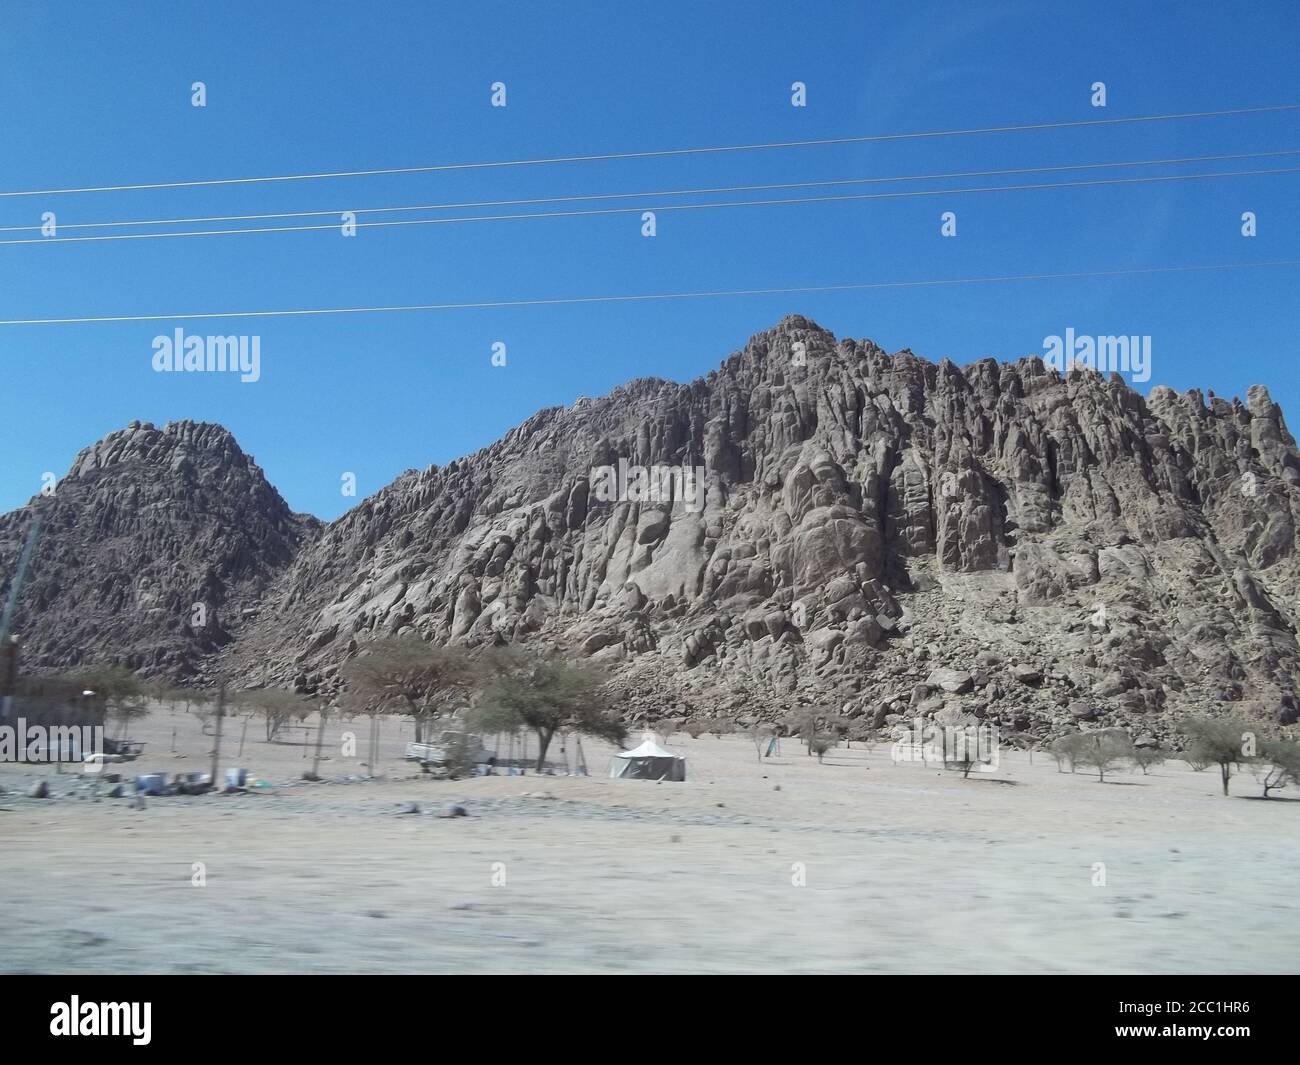 View of Mountain in Desert in Saudi Arabia Outback. Stock Photo